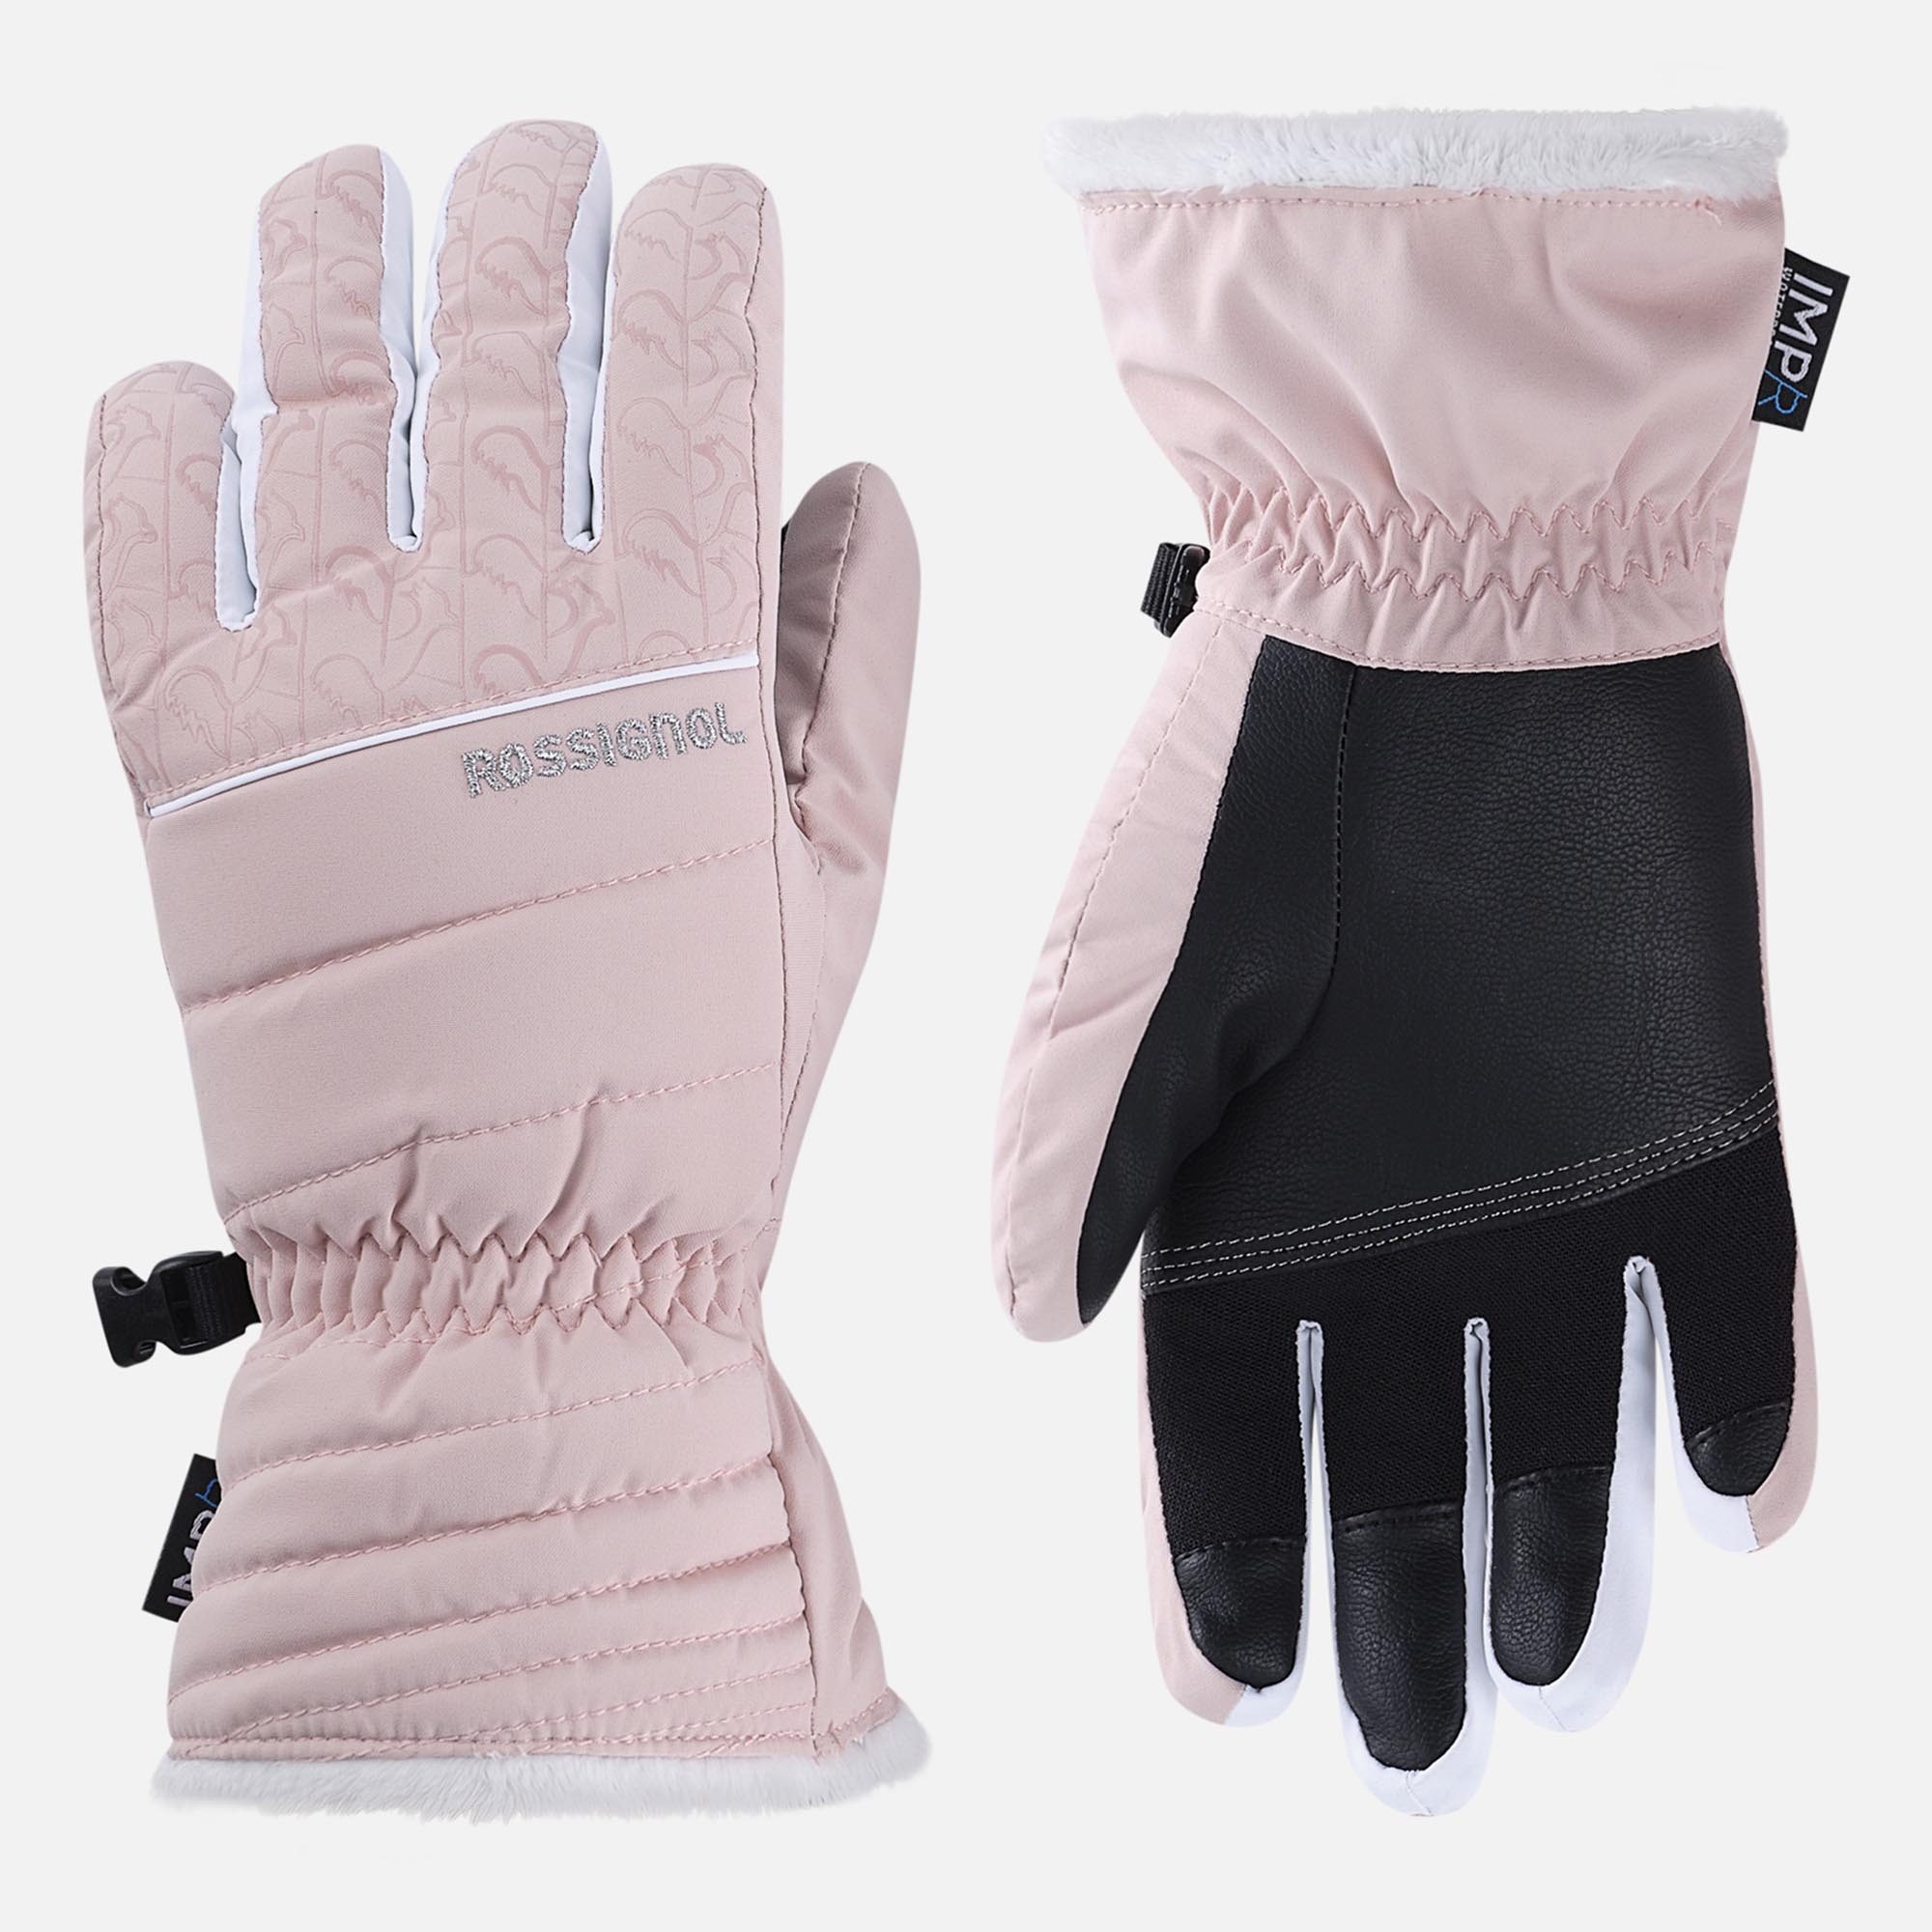 Comprar guantes esqui mujer – M+ store